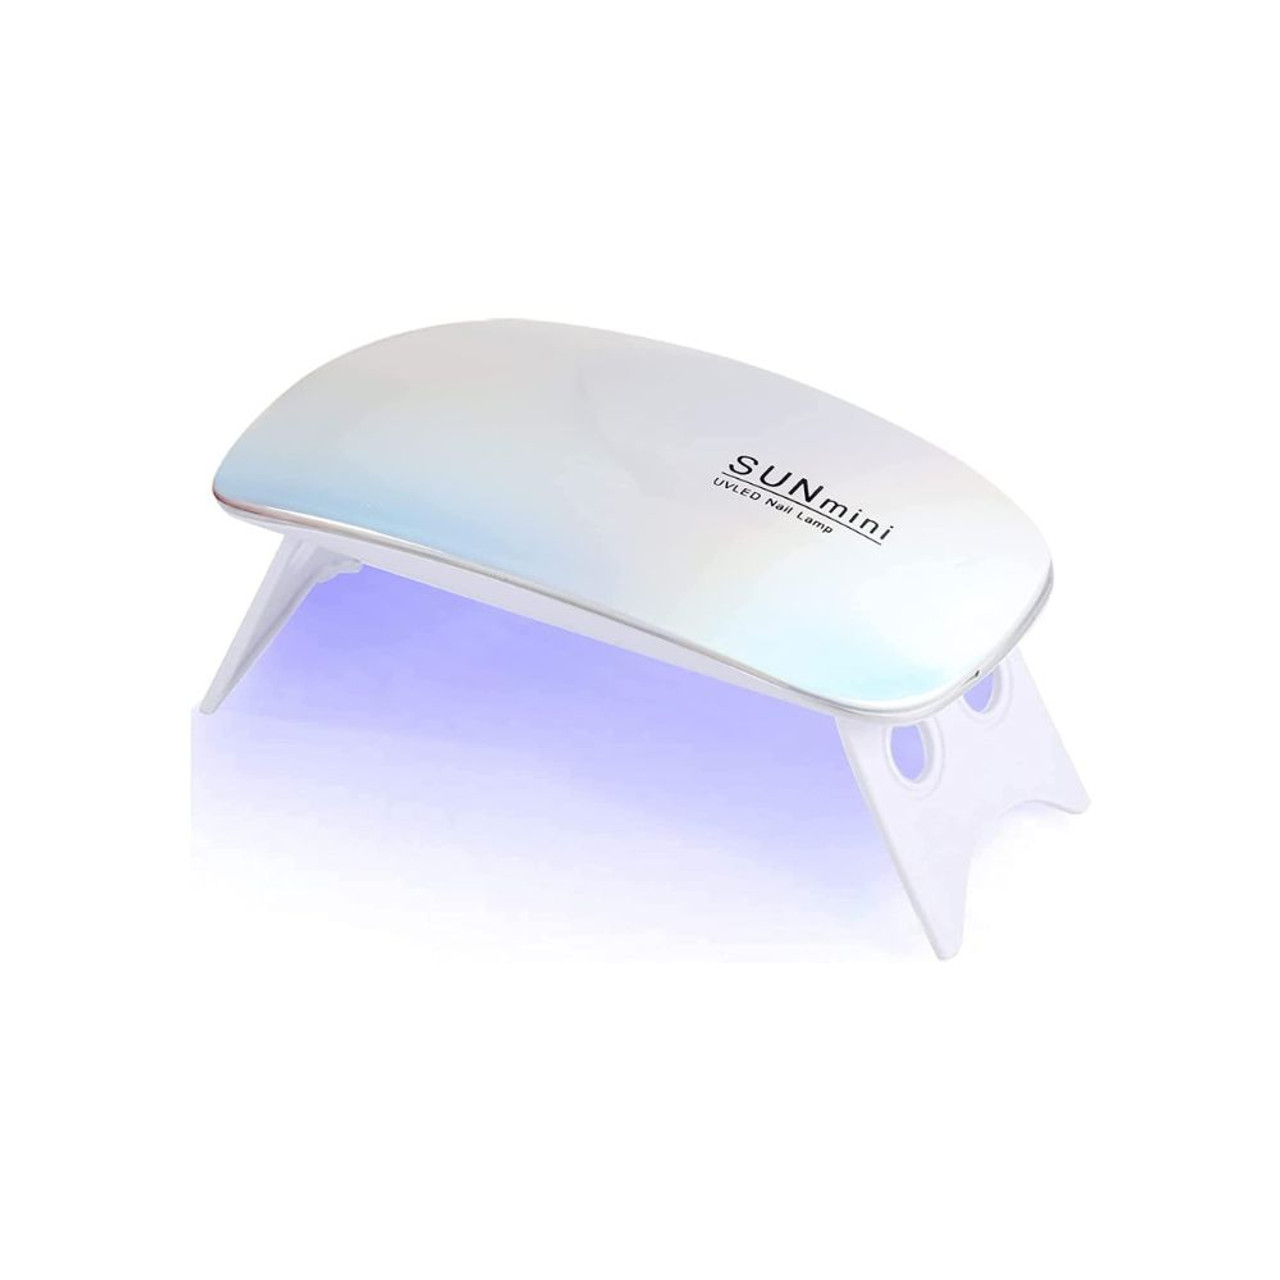 Mini UV-LED Lamp, UV Lights